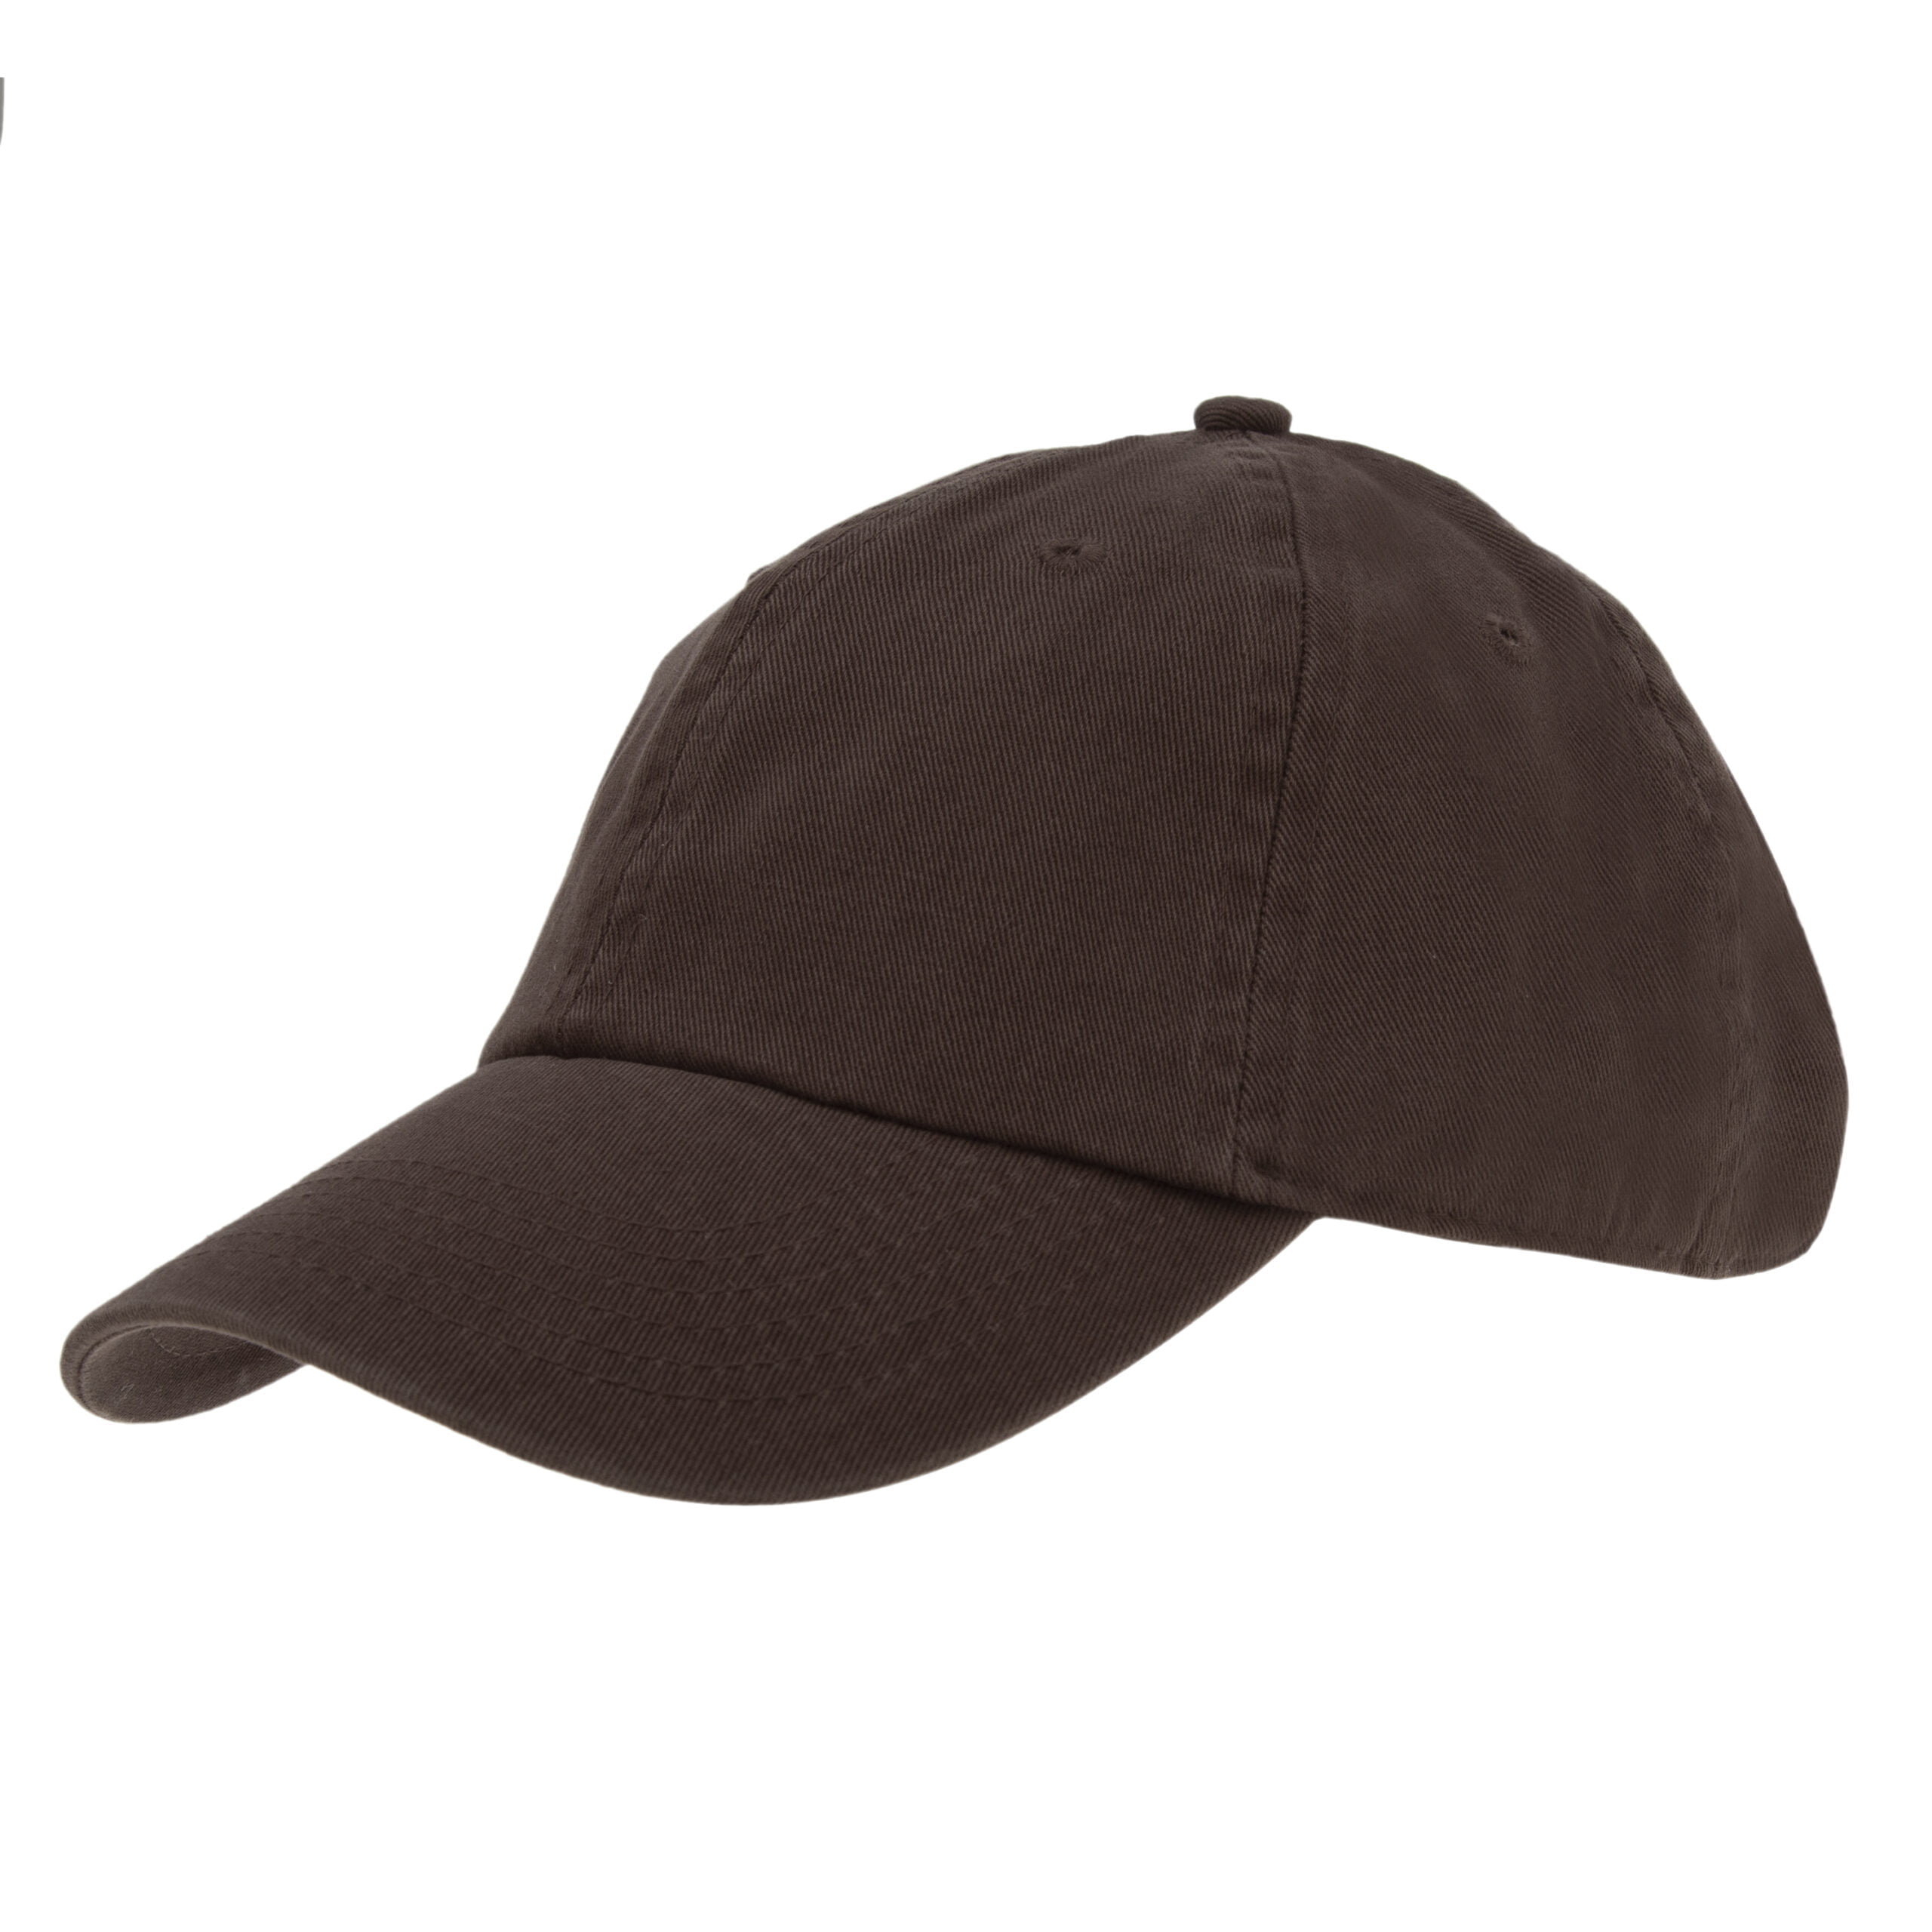 Dark Brown Cotton Cap with adjustable Clasp - Single Piece